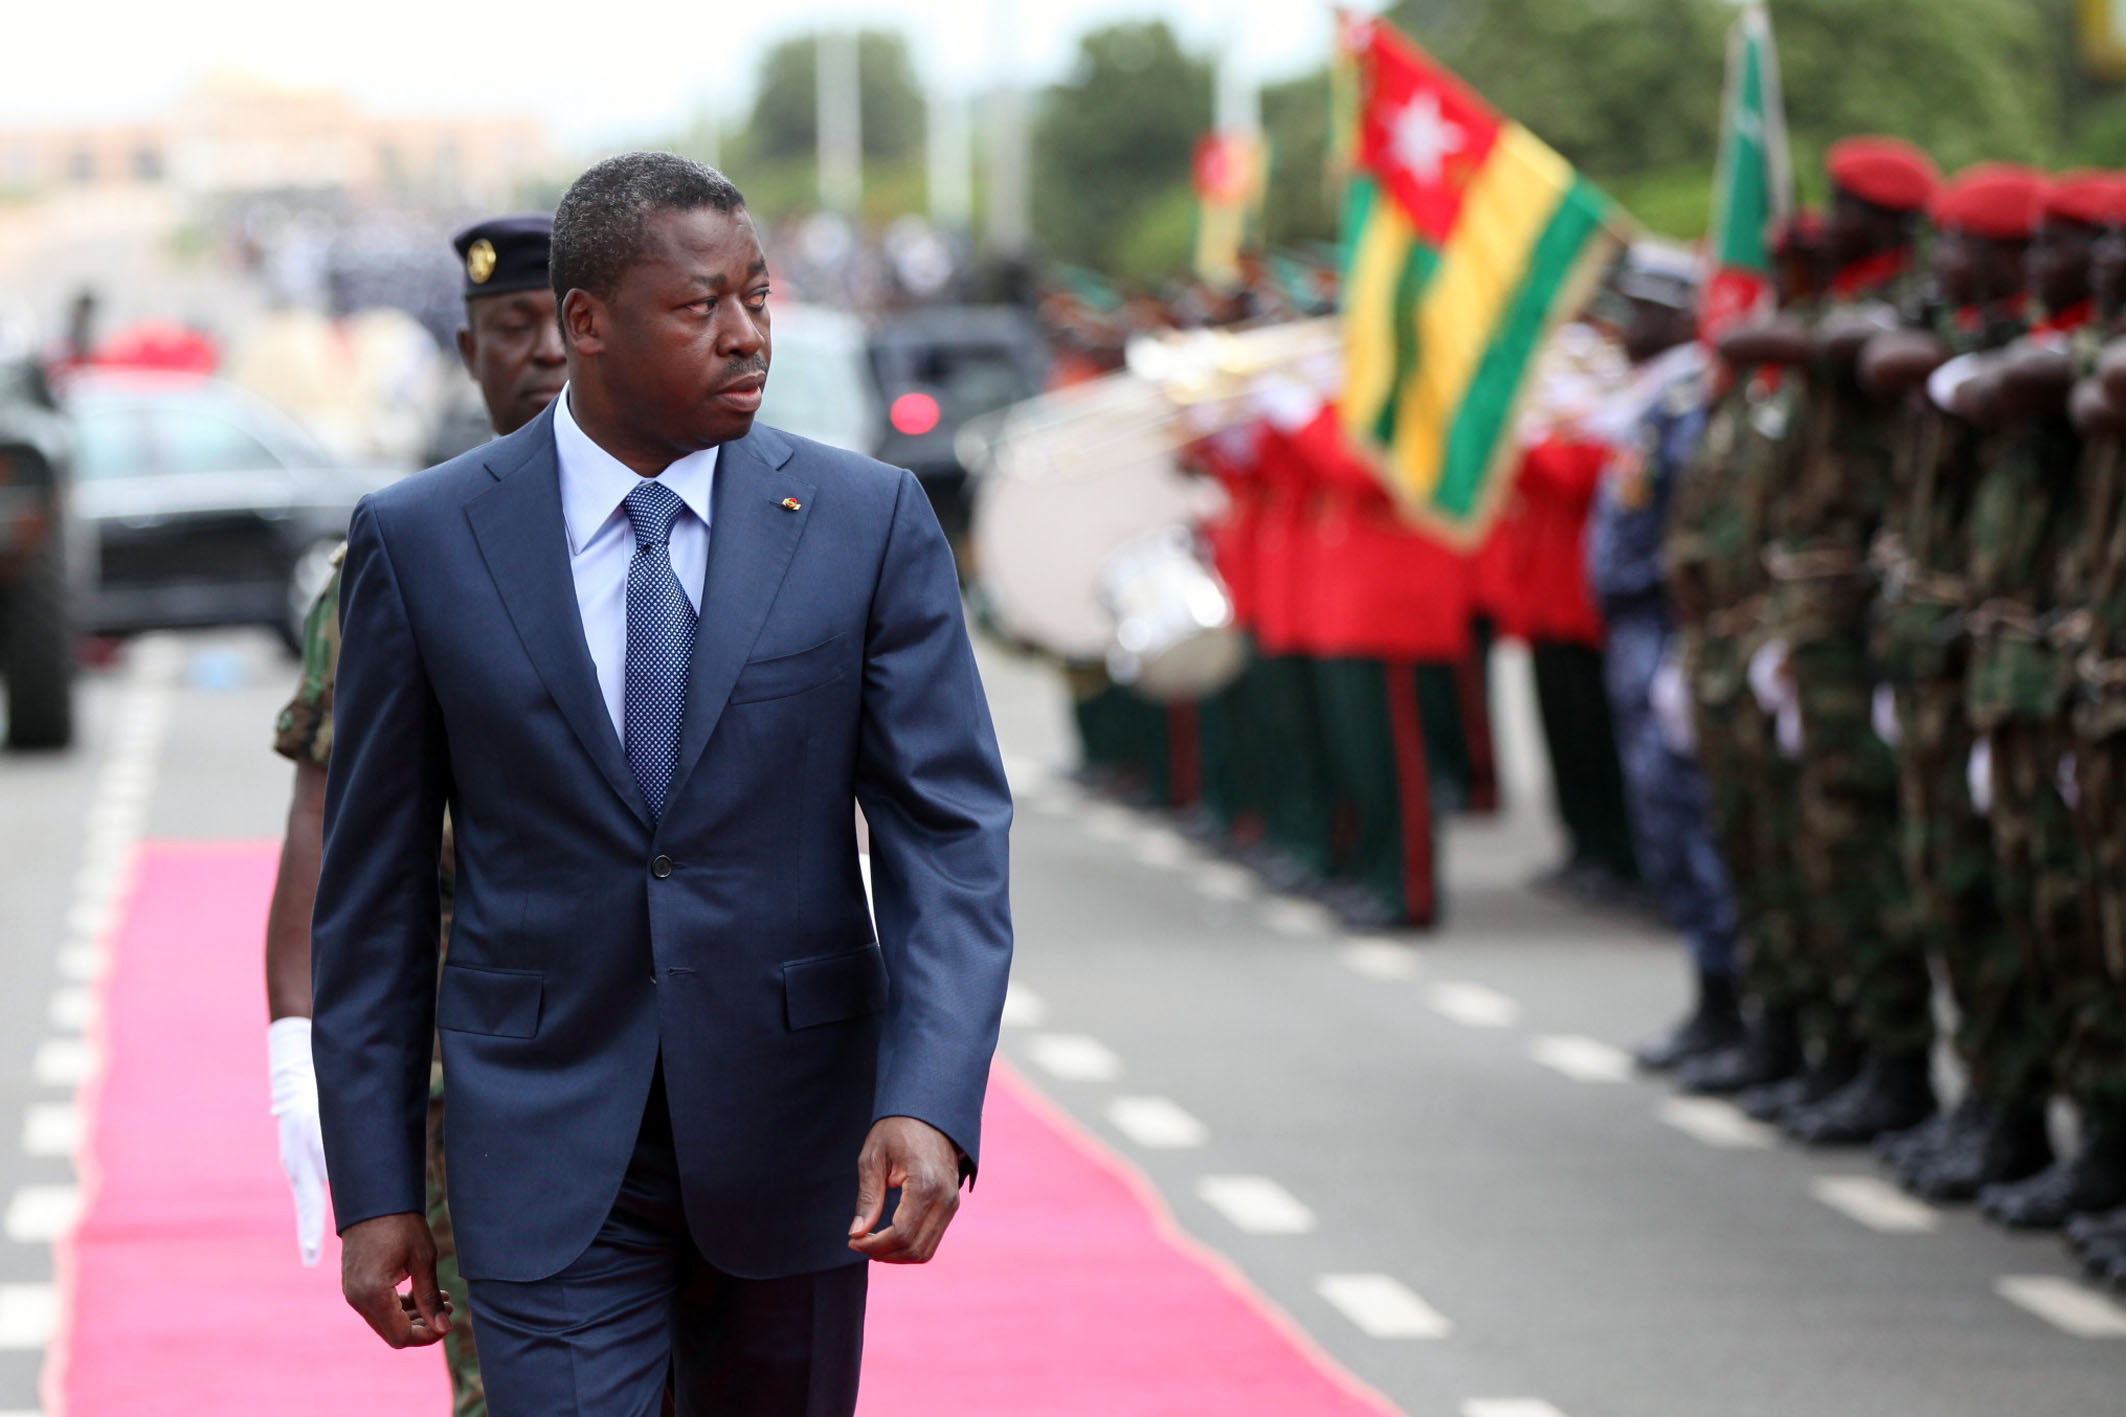 USAfrica: Togo President Gnassingbé bags 4th term until 2030; oppo leader Kodjo alleges rigging, fraud